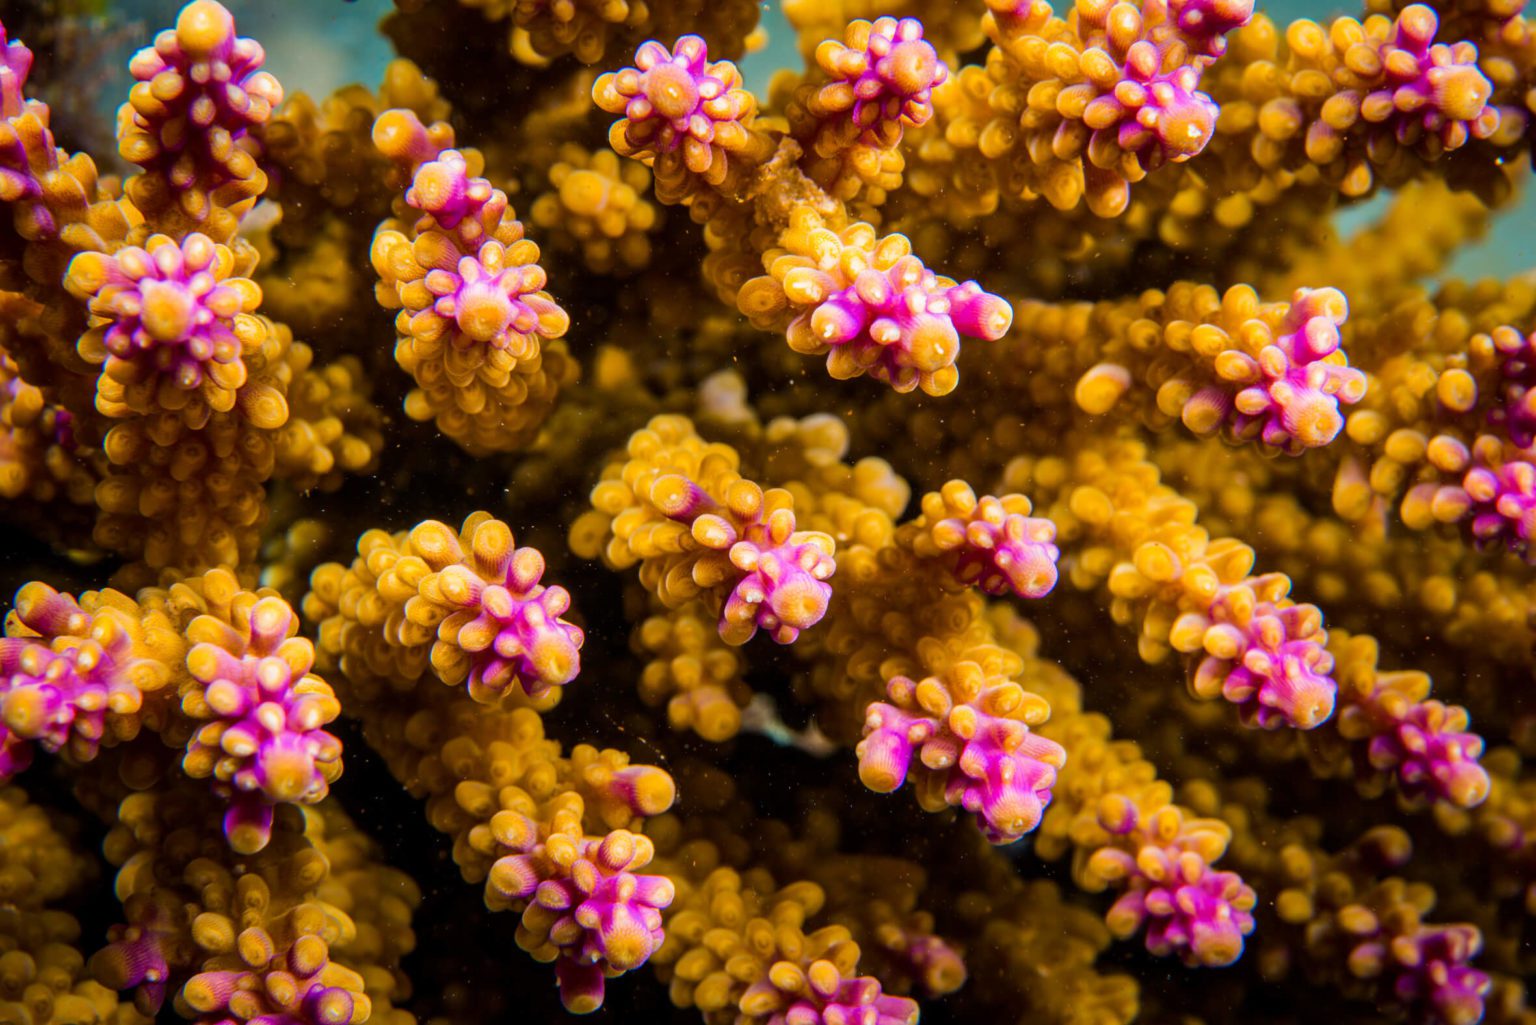 Coral IVF babies